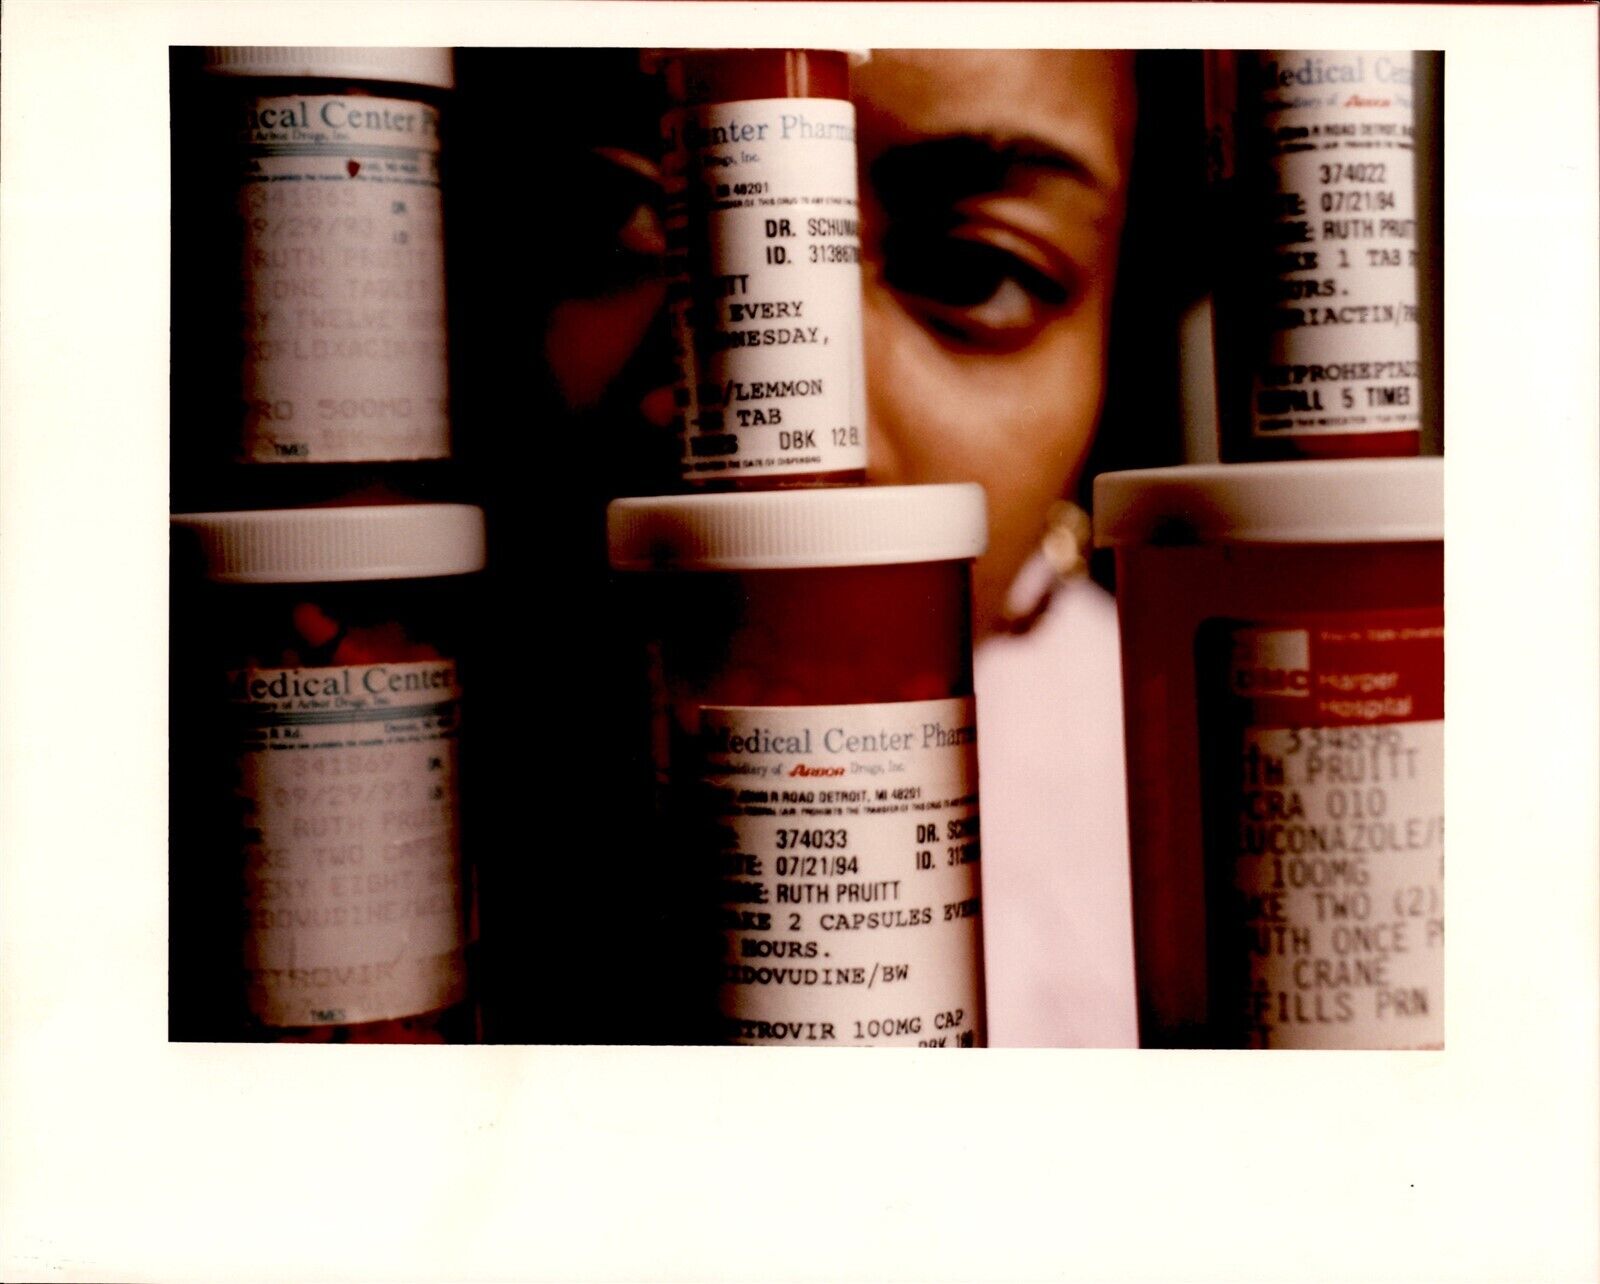 LG24 1995 Orig Color Photo FACES OF AIDS CRISIS HIV DISEASE VICTIM MEDICINE